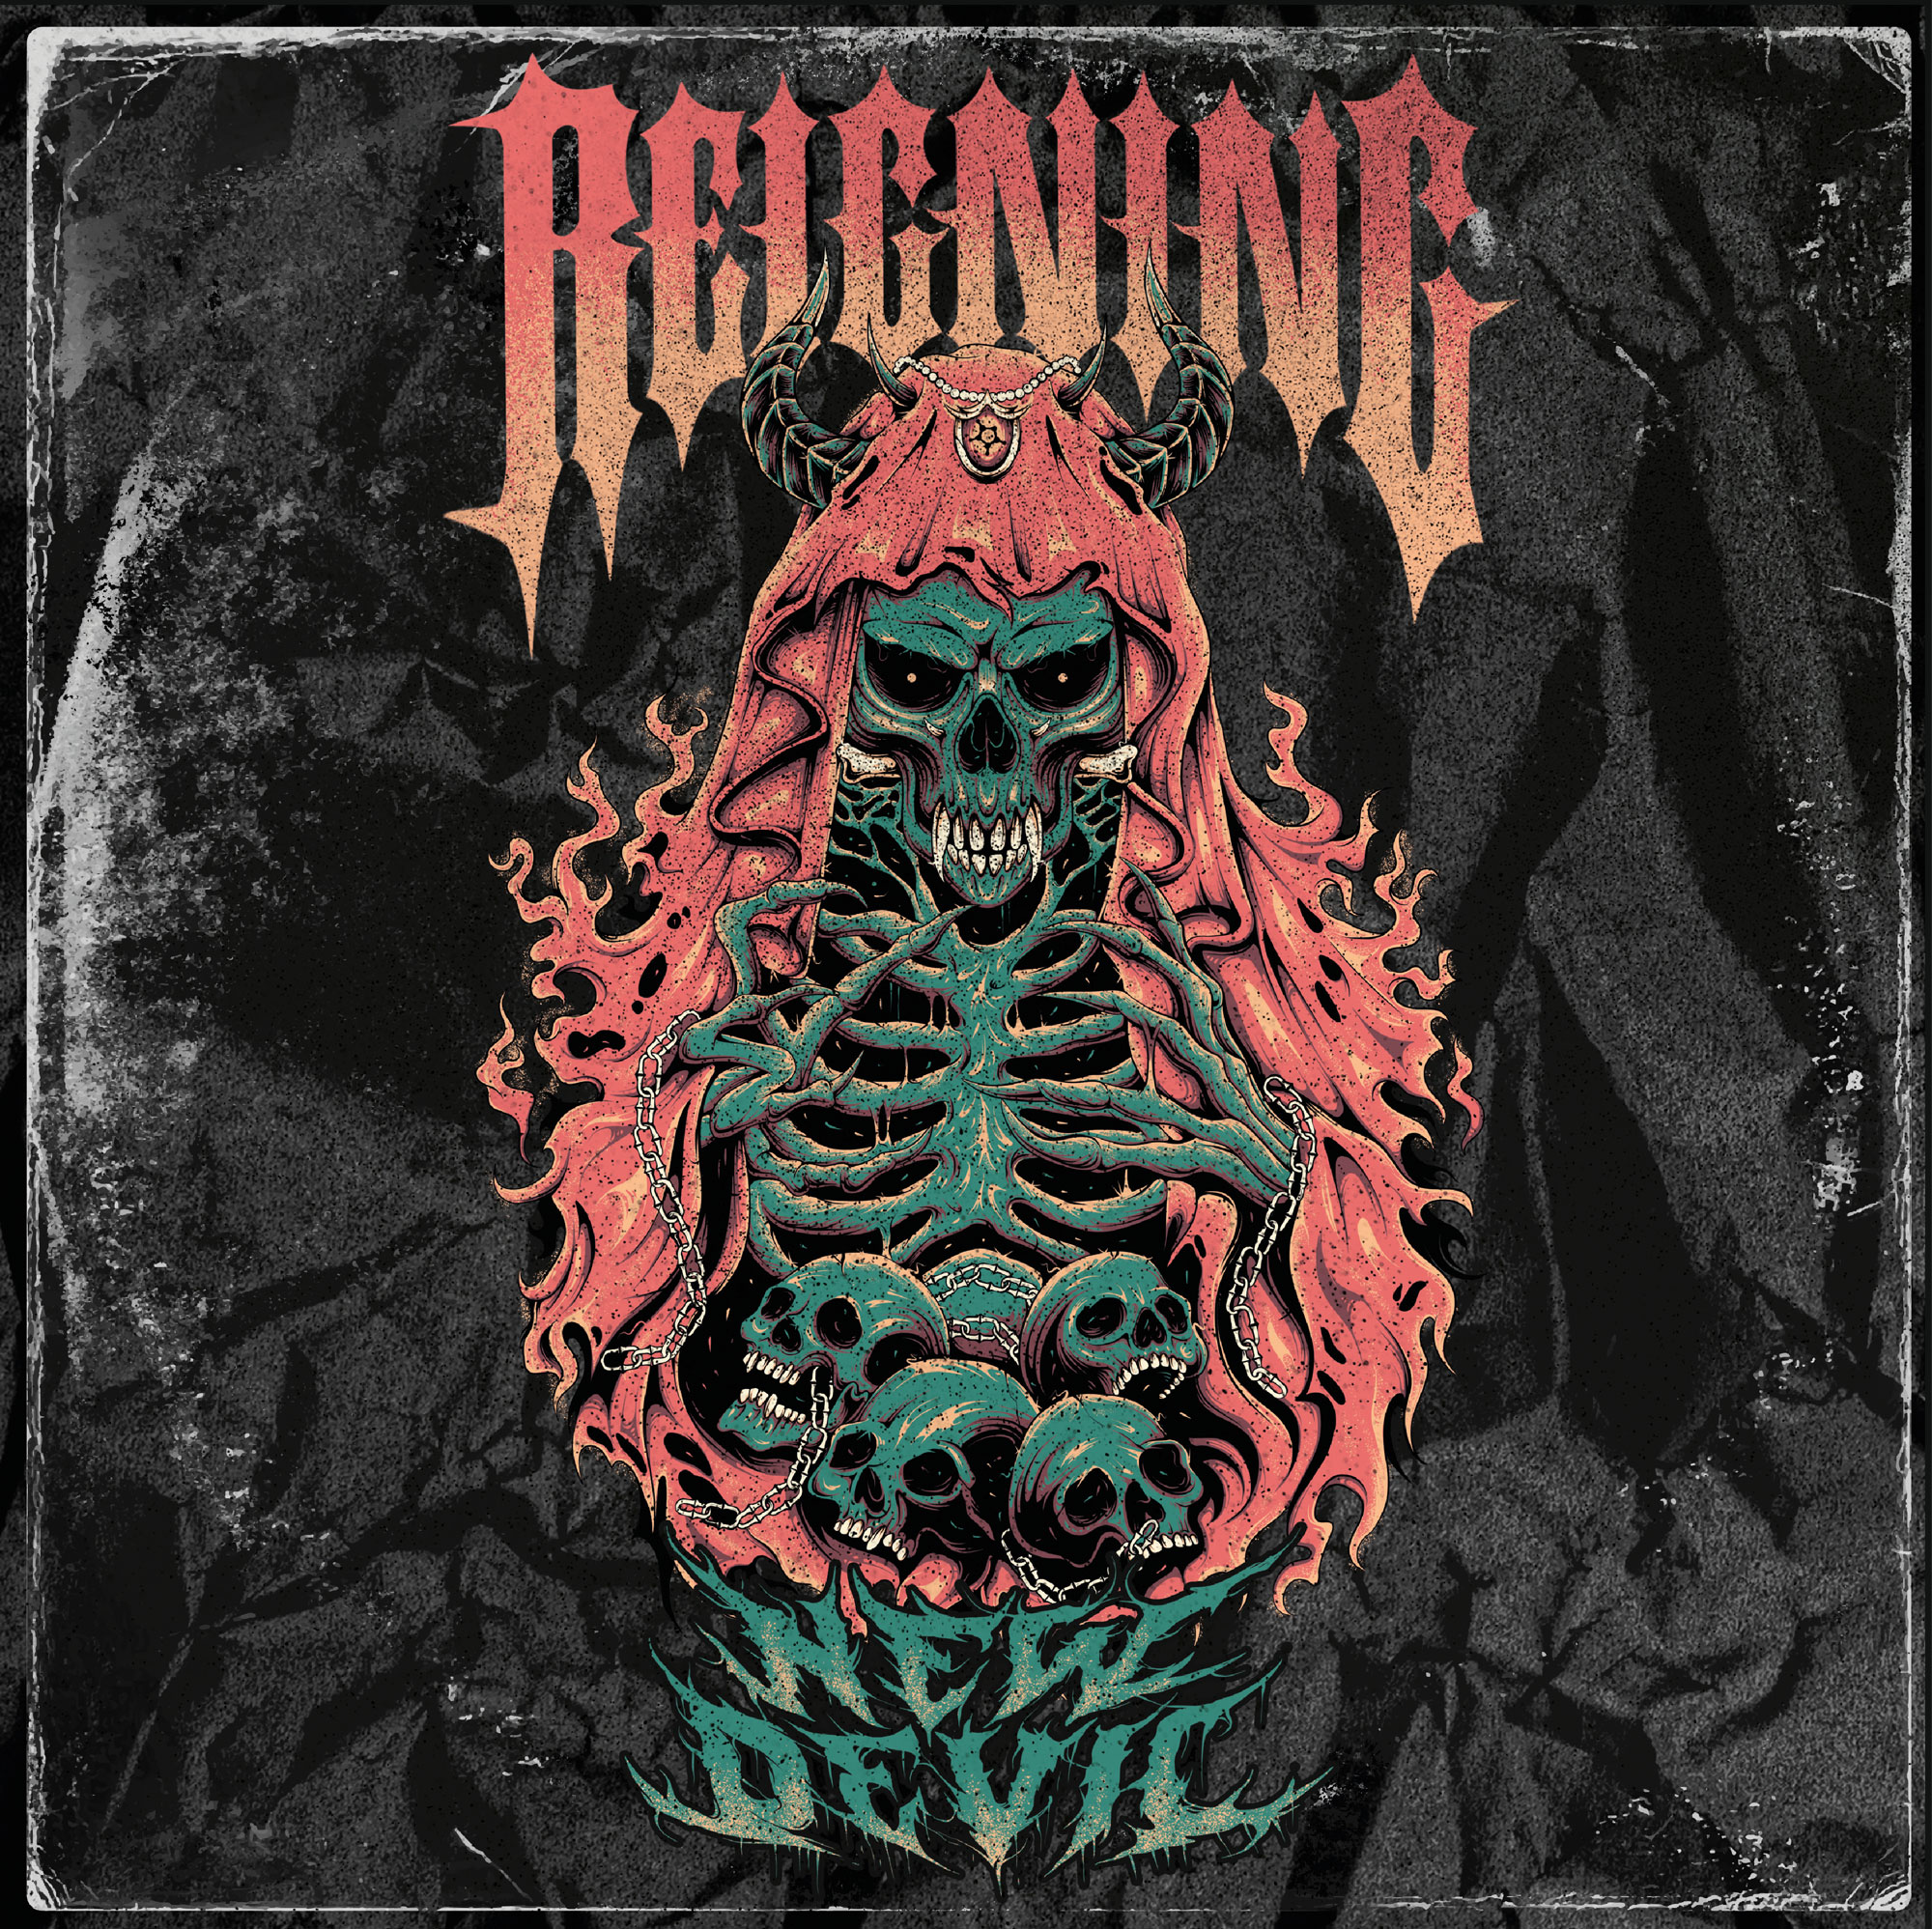  Reinventando el metal, escucha el álbum “New Devil” de Reigning